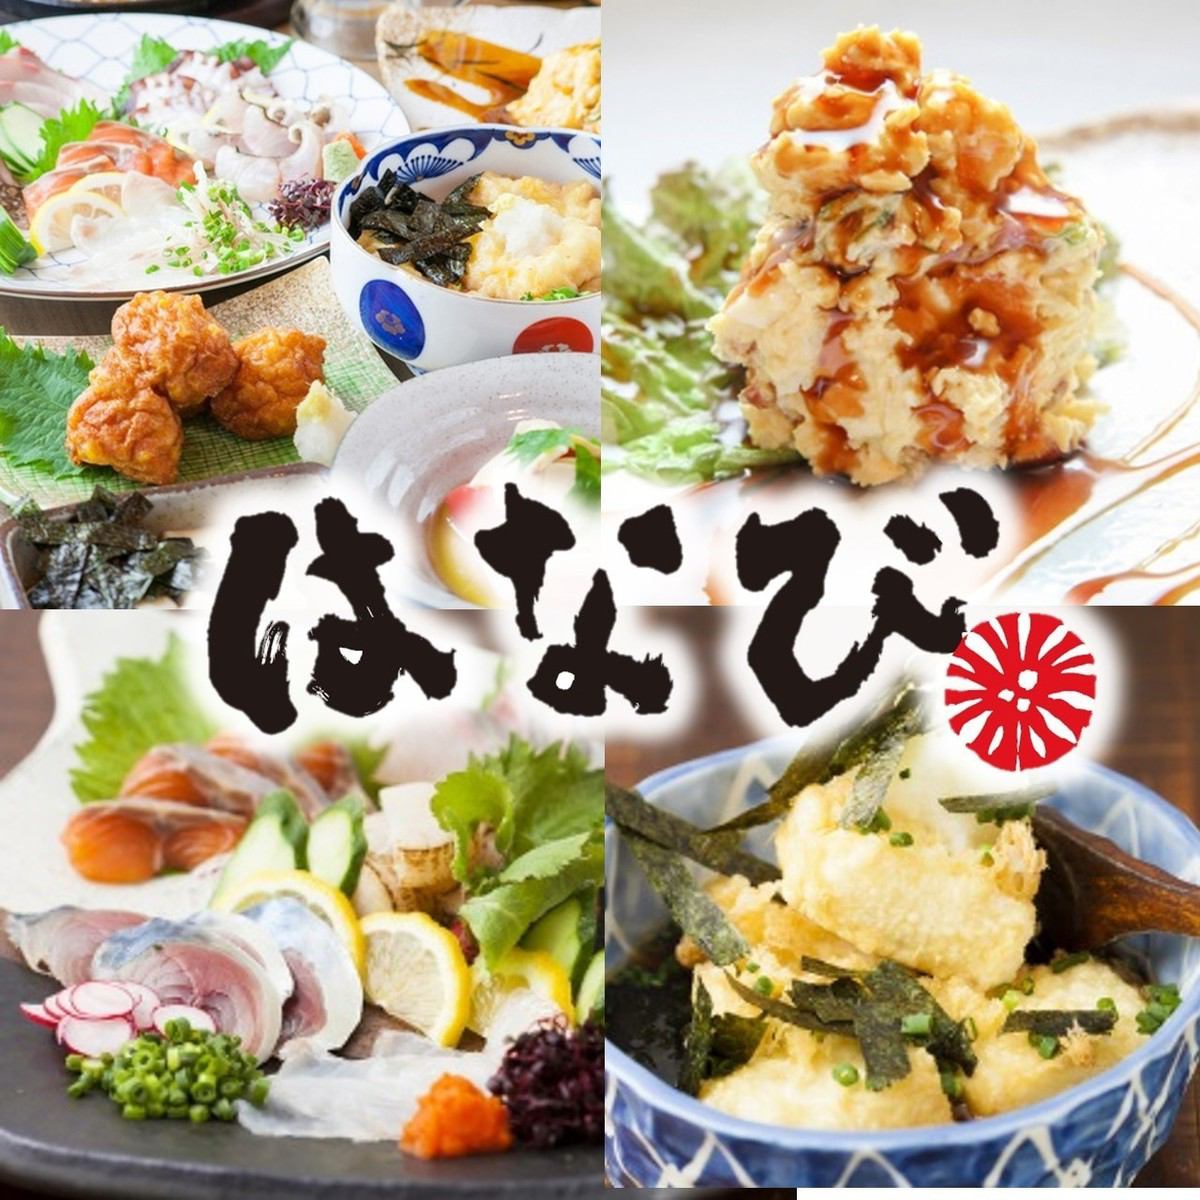 Ohashi 營業至 2:00！熱情的員工和毫不妥協的美食歡迎您的光臨！